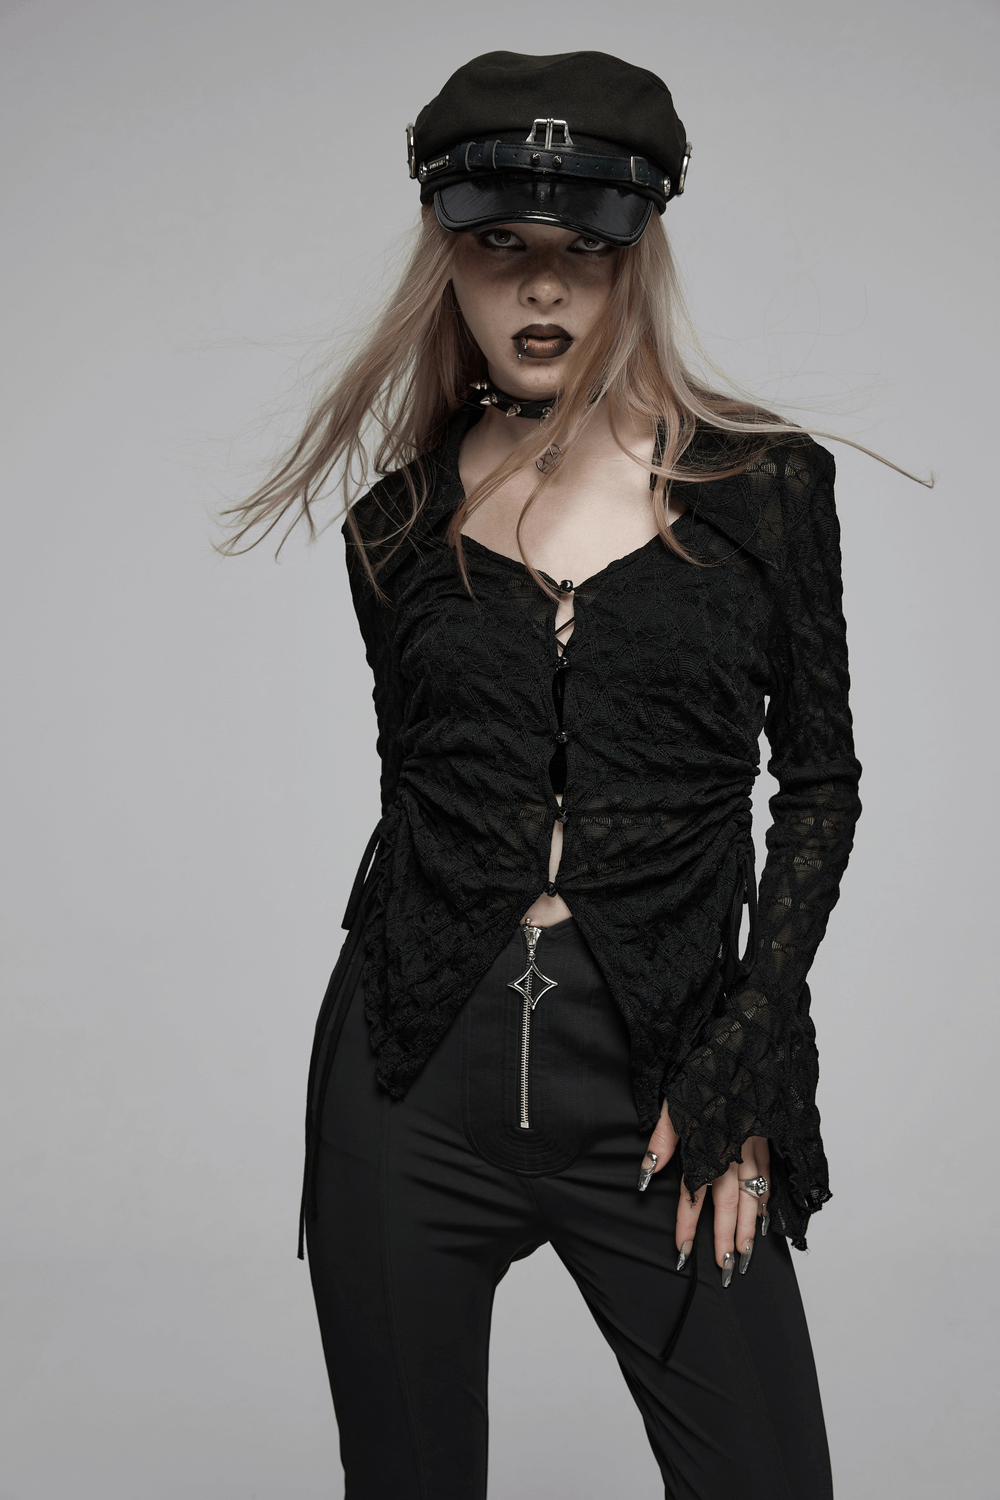 Elegant Black Gothic Jacquard Lace V-Neck Shirt